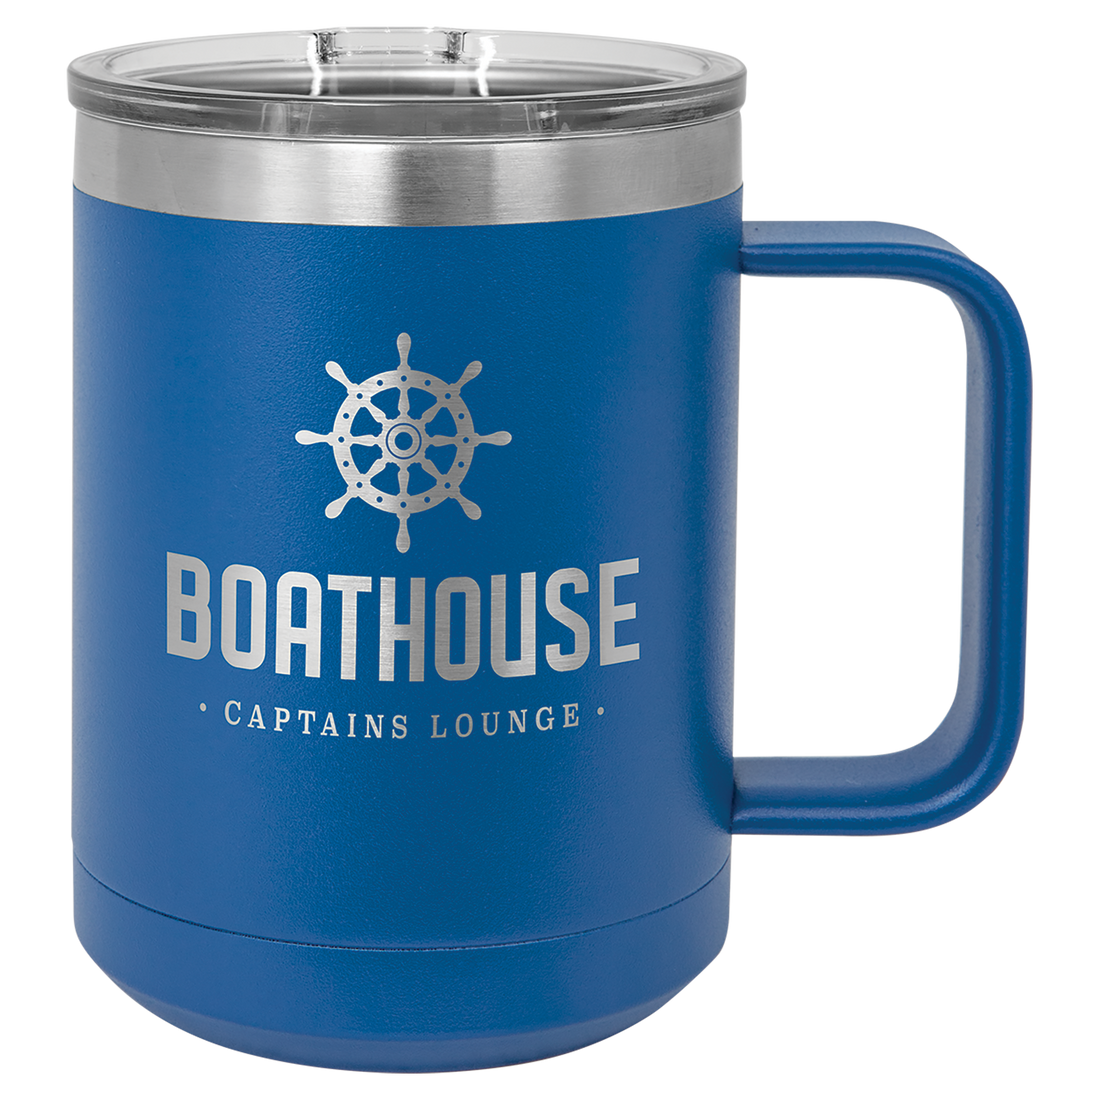 Royal blue  insulated travel mug with logo engraving.